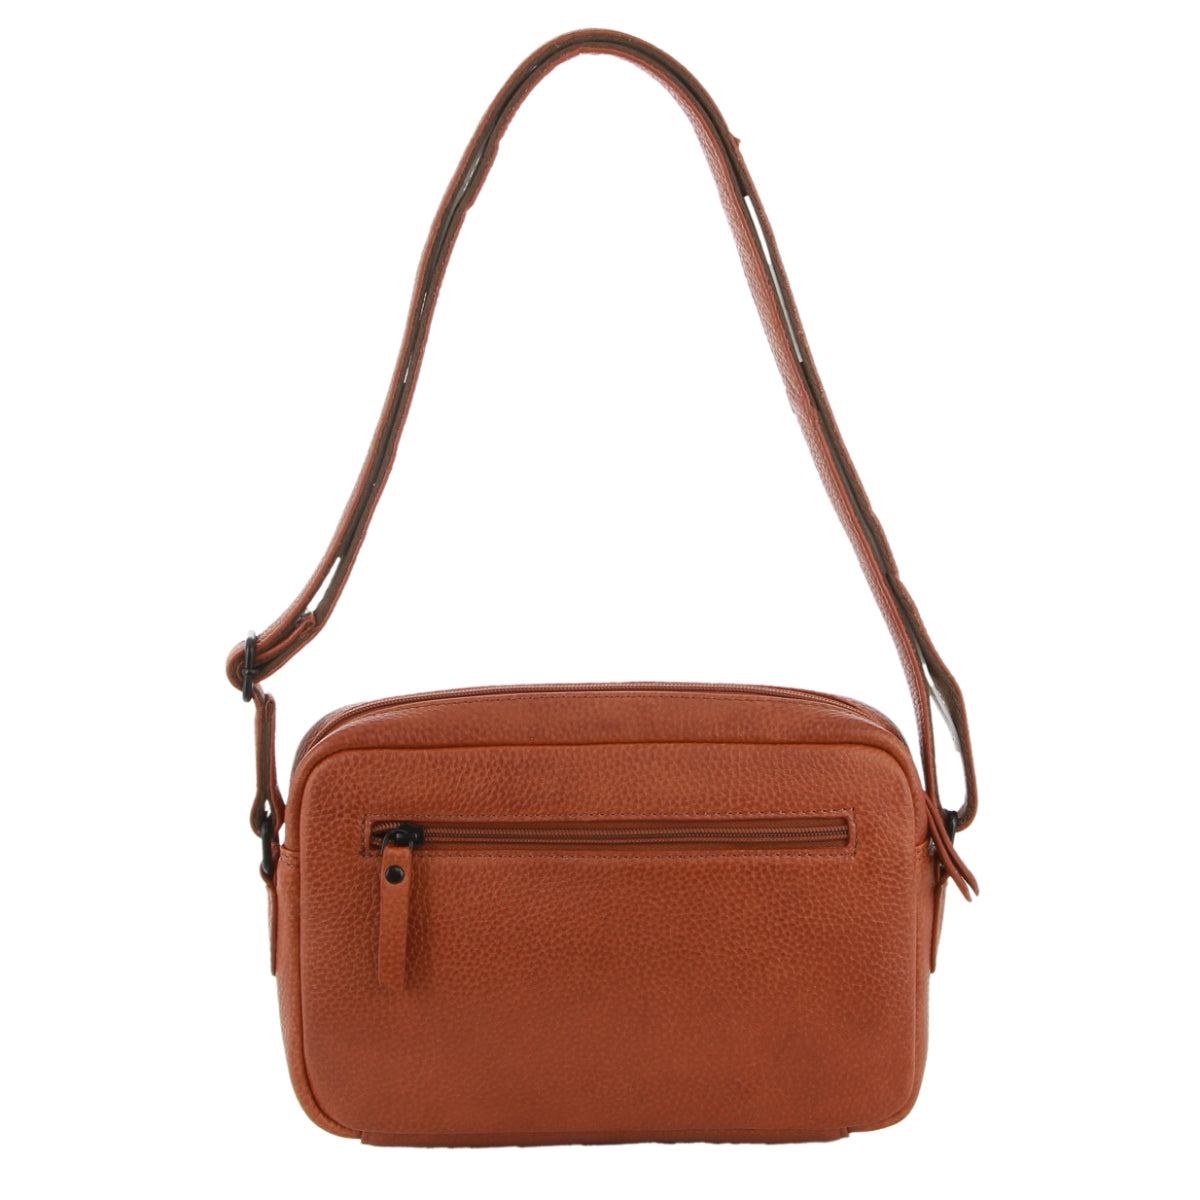 Milleni - NL3871 Small leather sidebag - Cognac